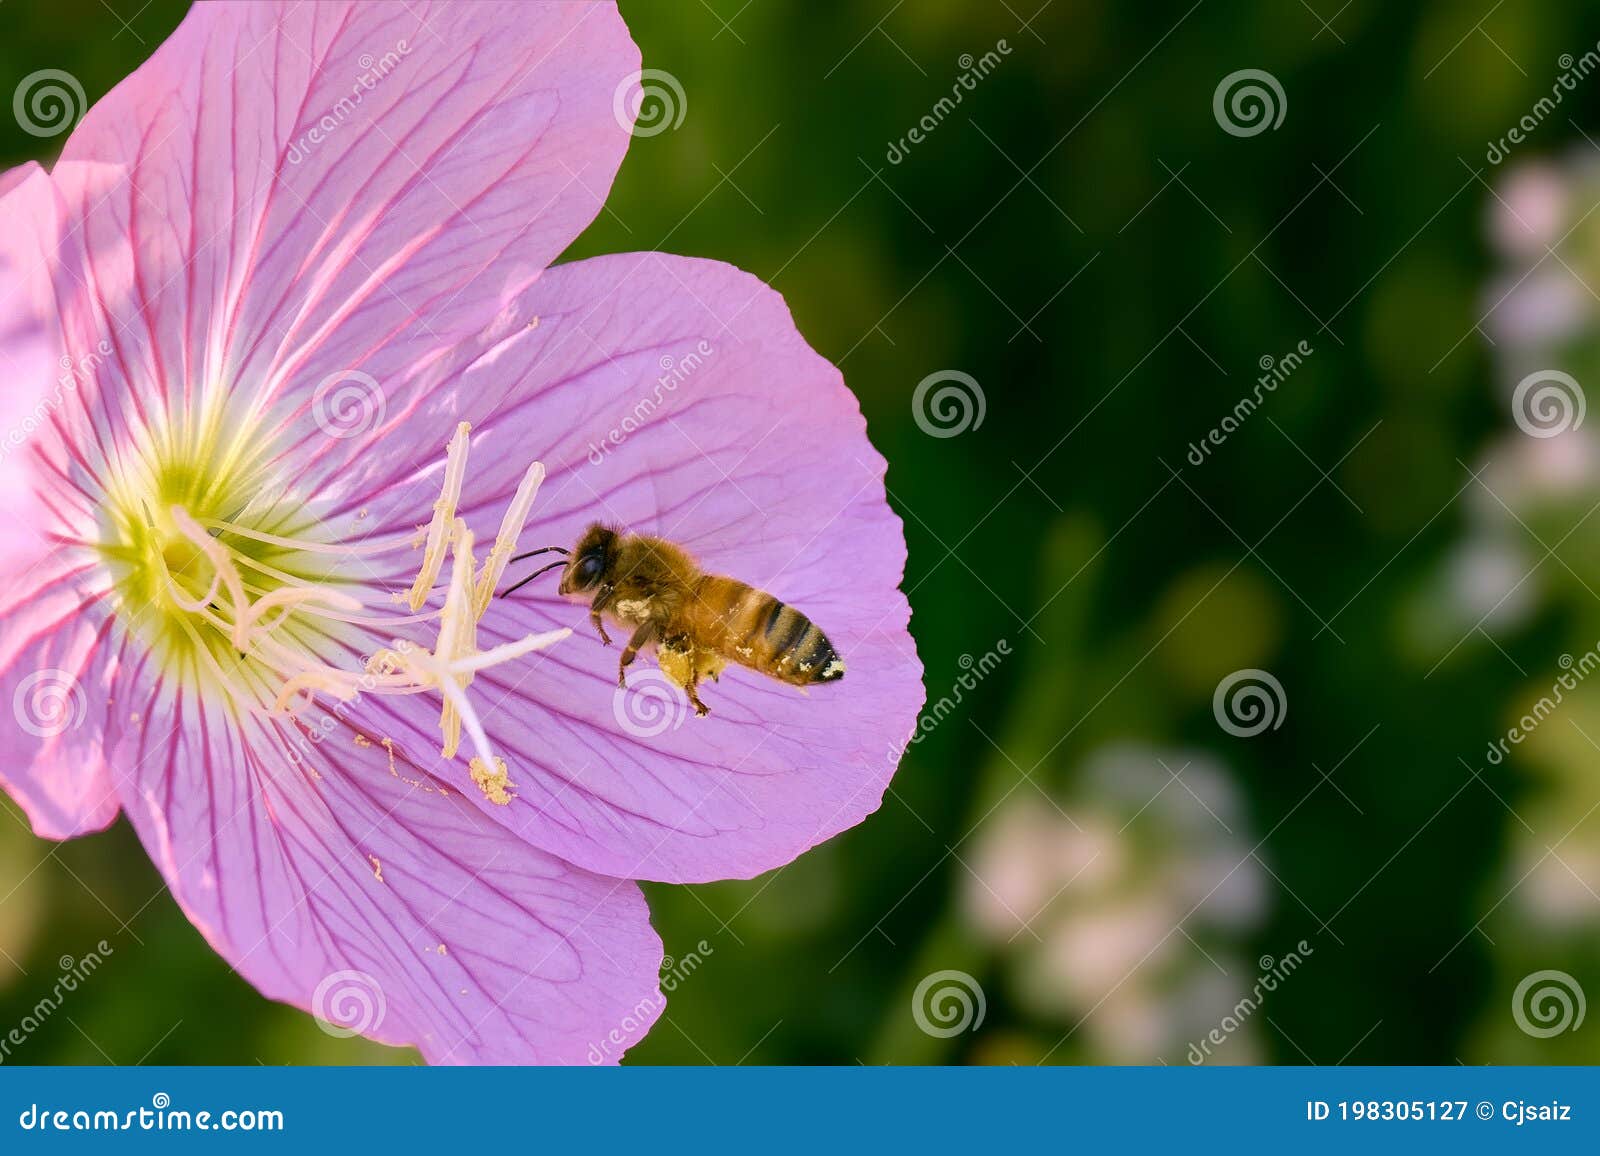 bee carrying polen to flower